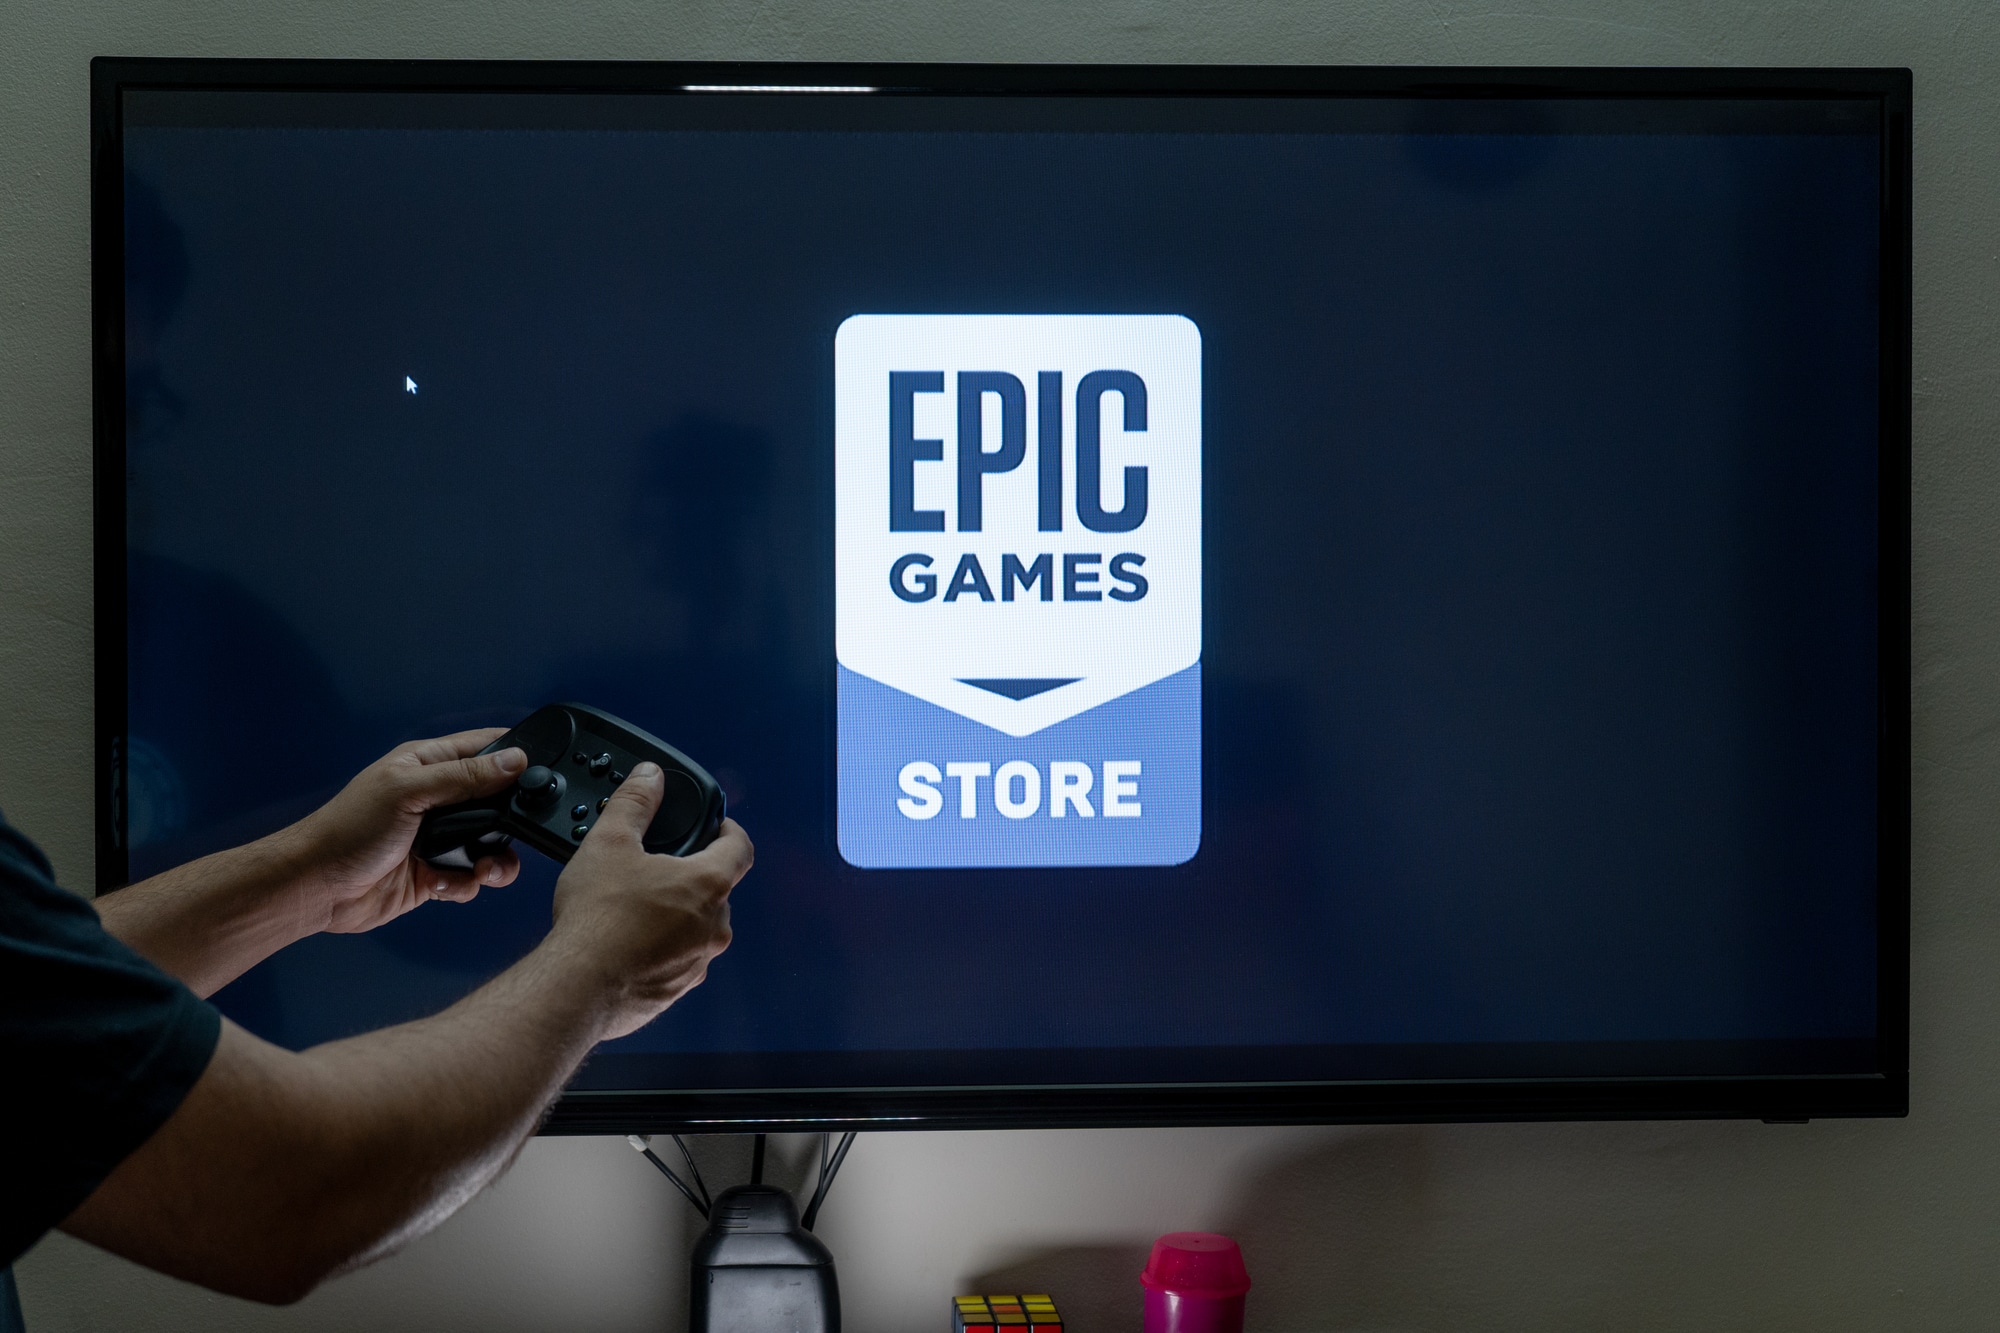 XCOM 2 and Insurmountable free games from Epic Games Store next week thumbnail